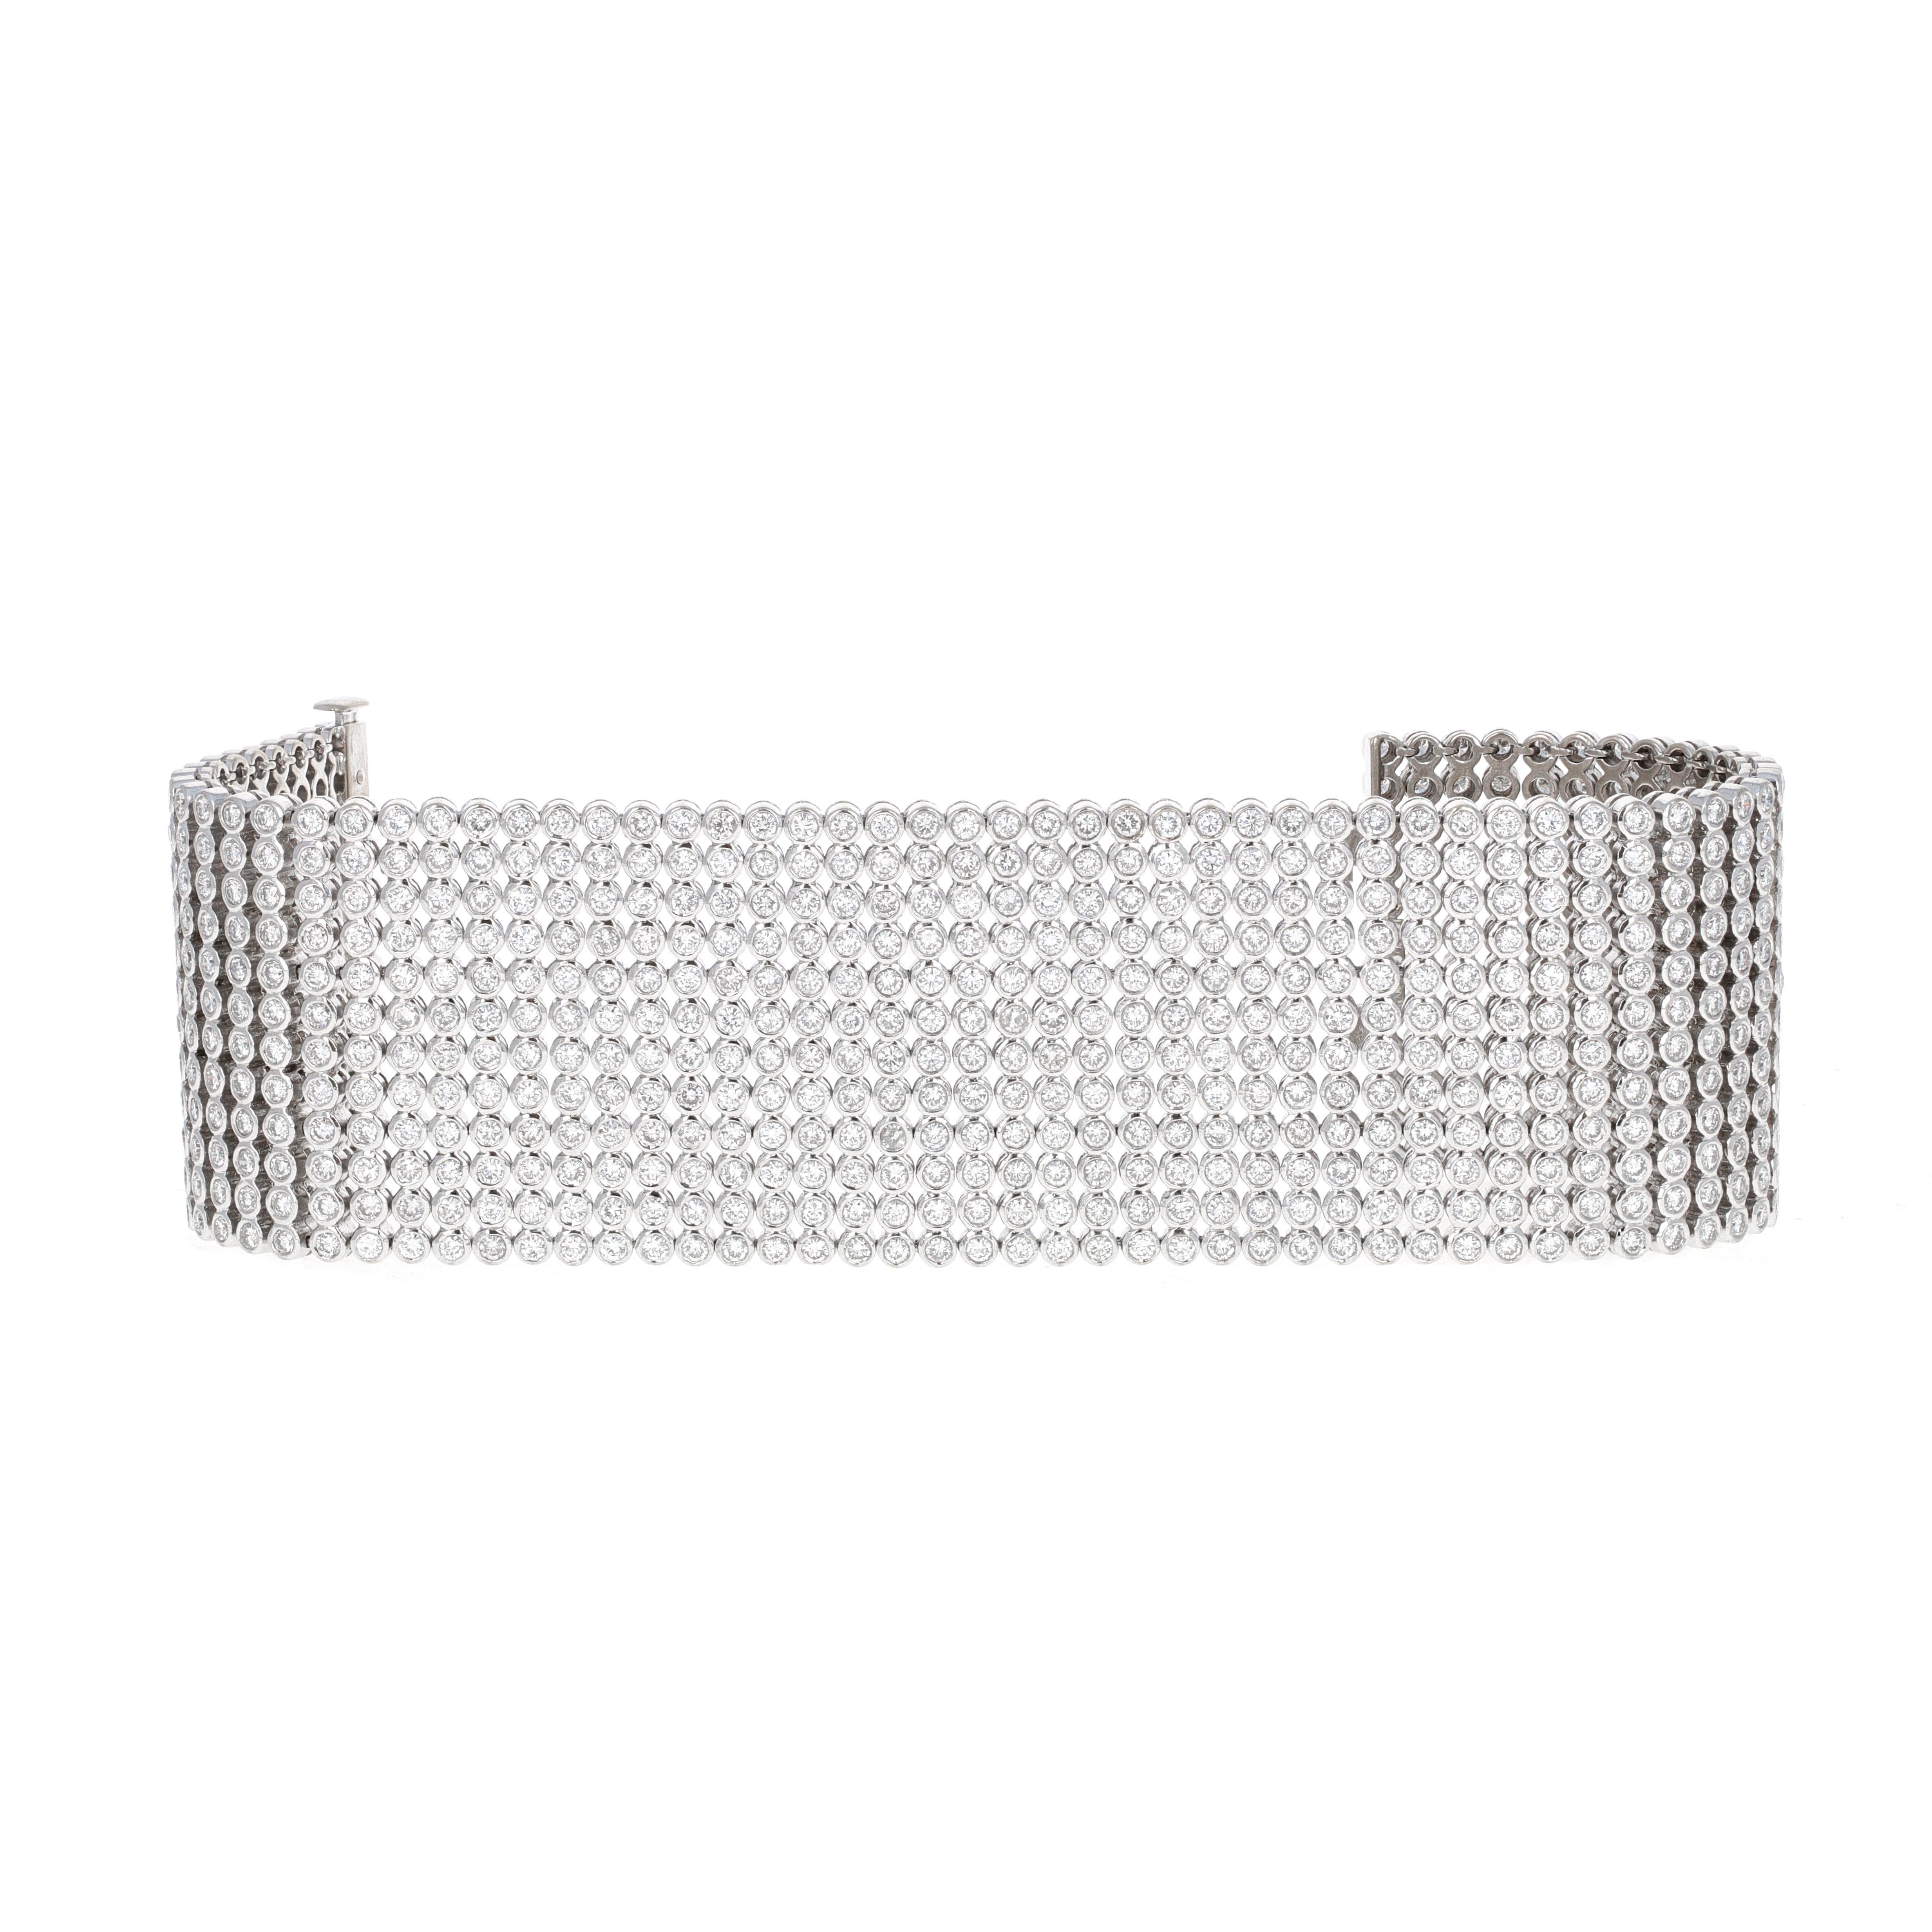 12 carat diamond tennis bracelet